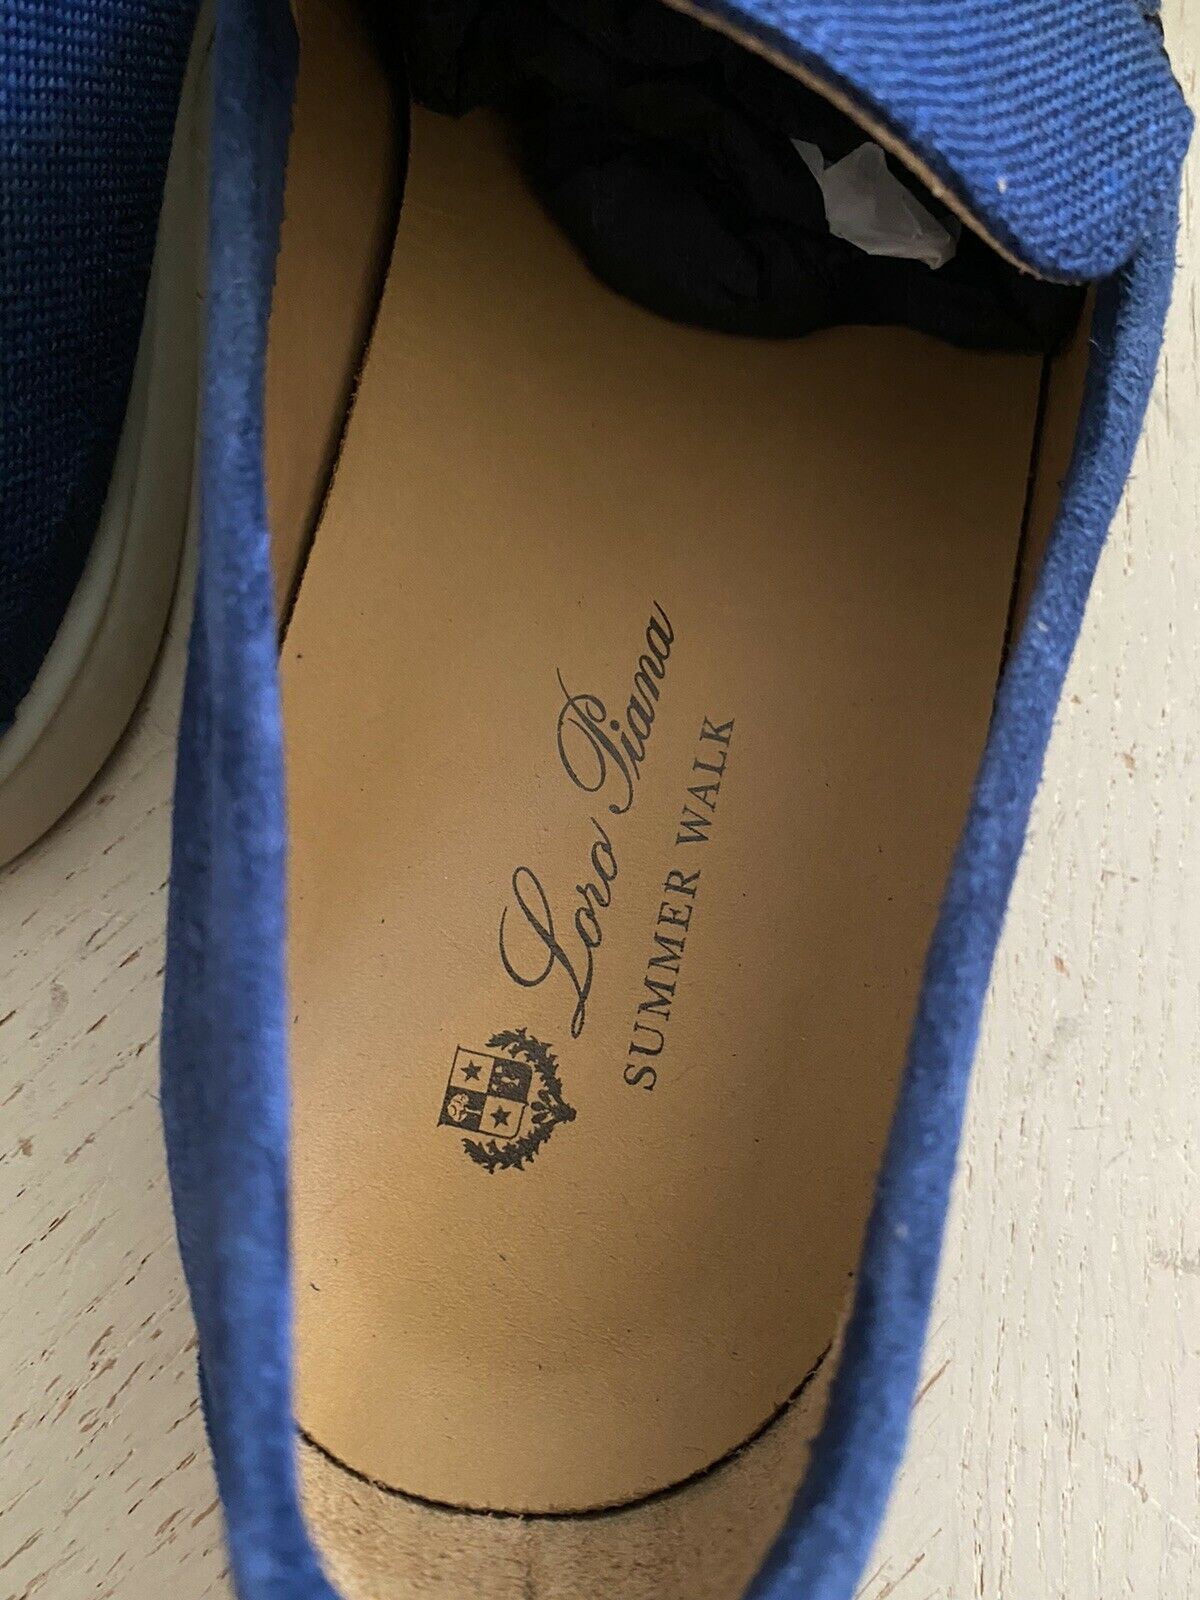 New $750 Loro Piana Men’s Canvas/Suedy Loafers Shoes Blue 13 US/46 Eu Italy